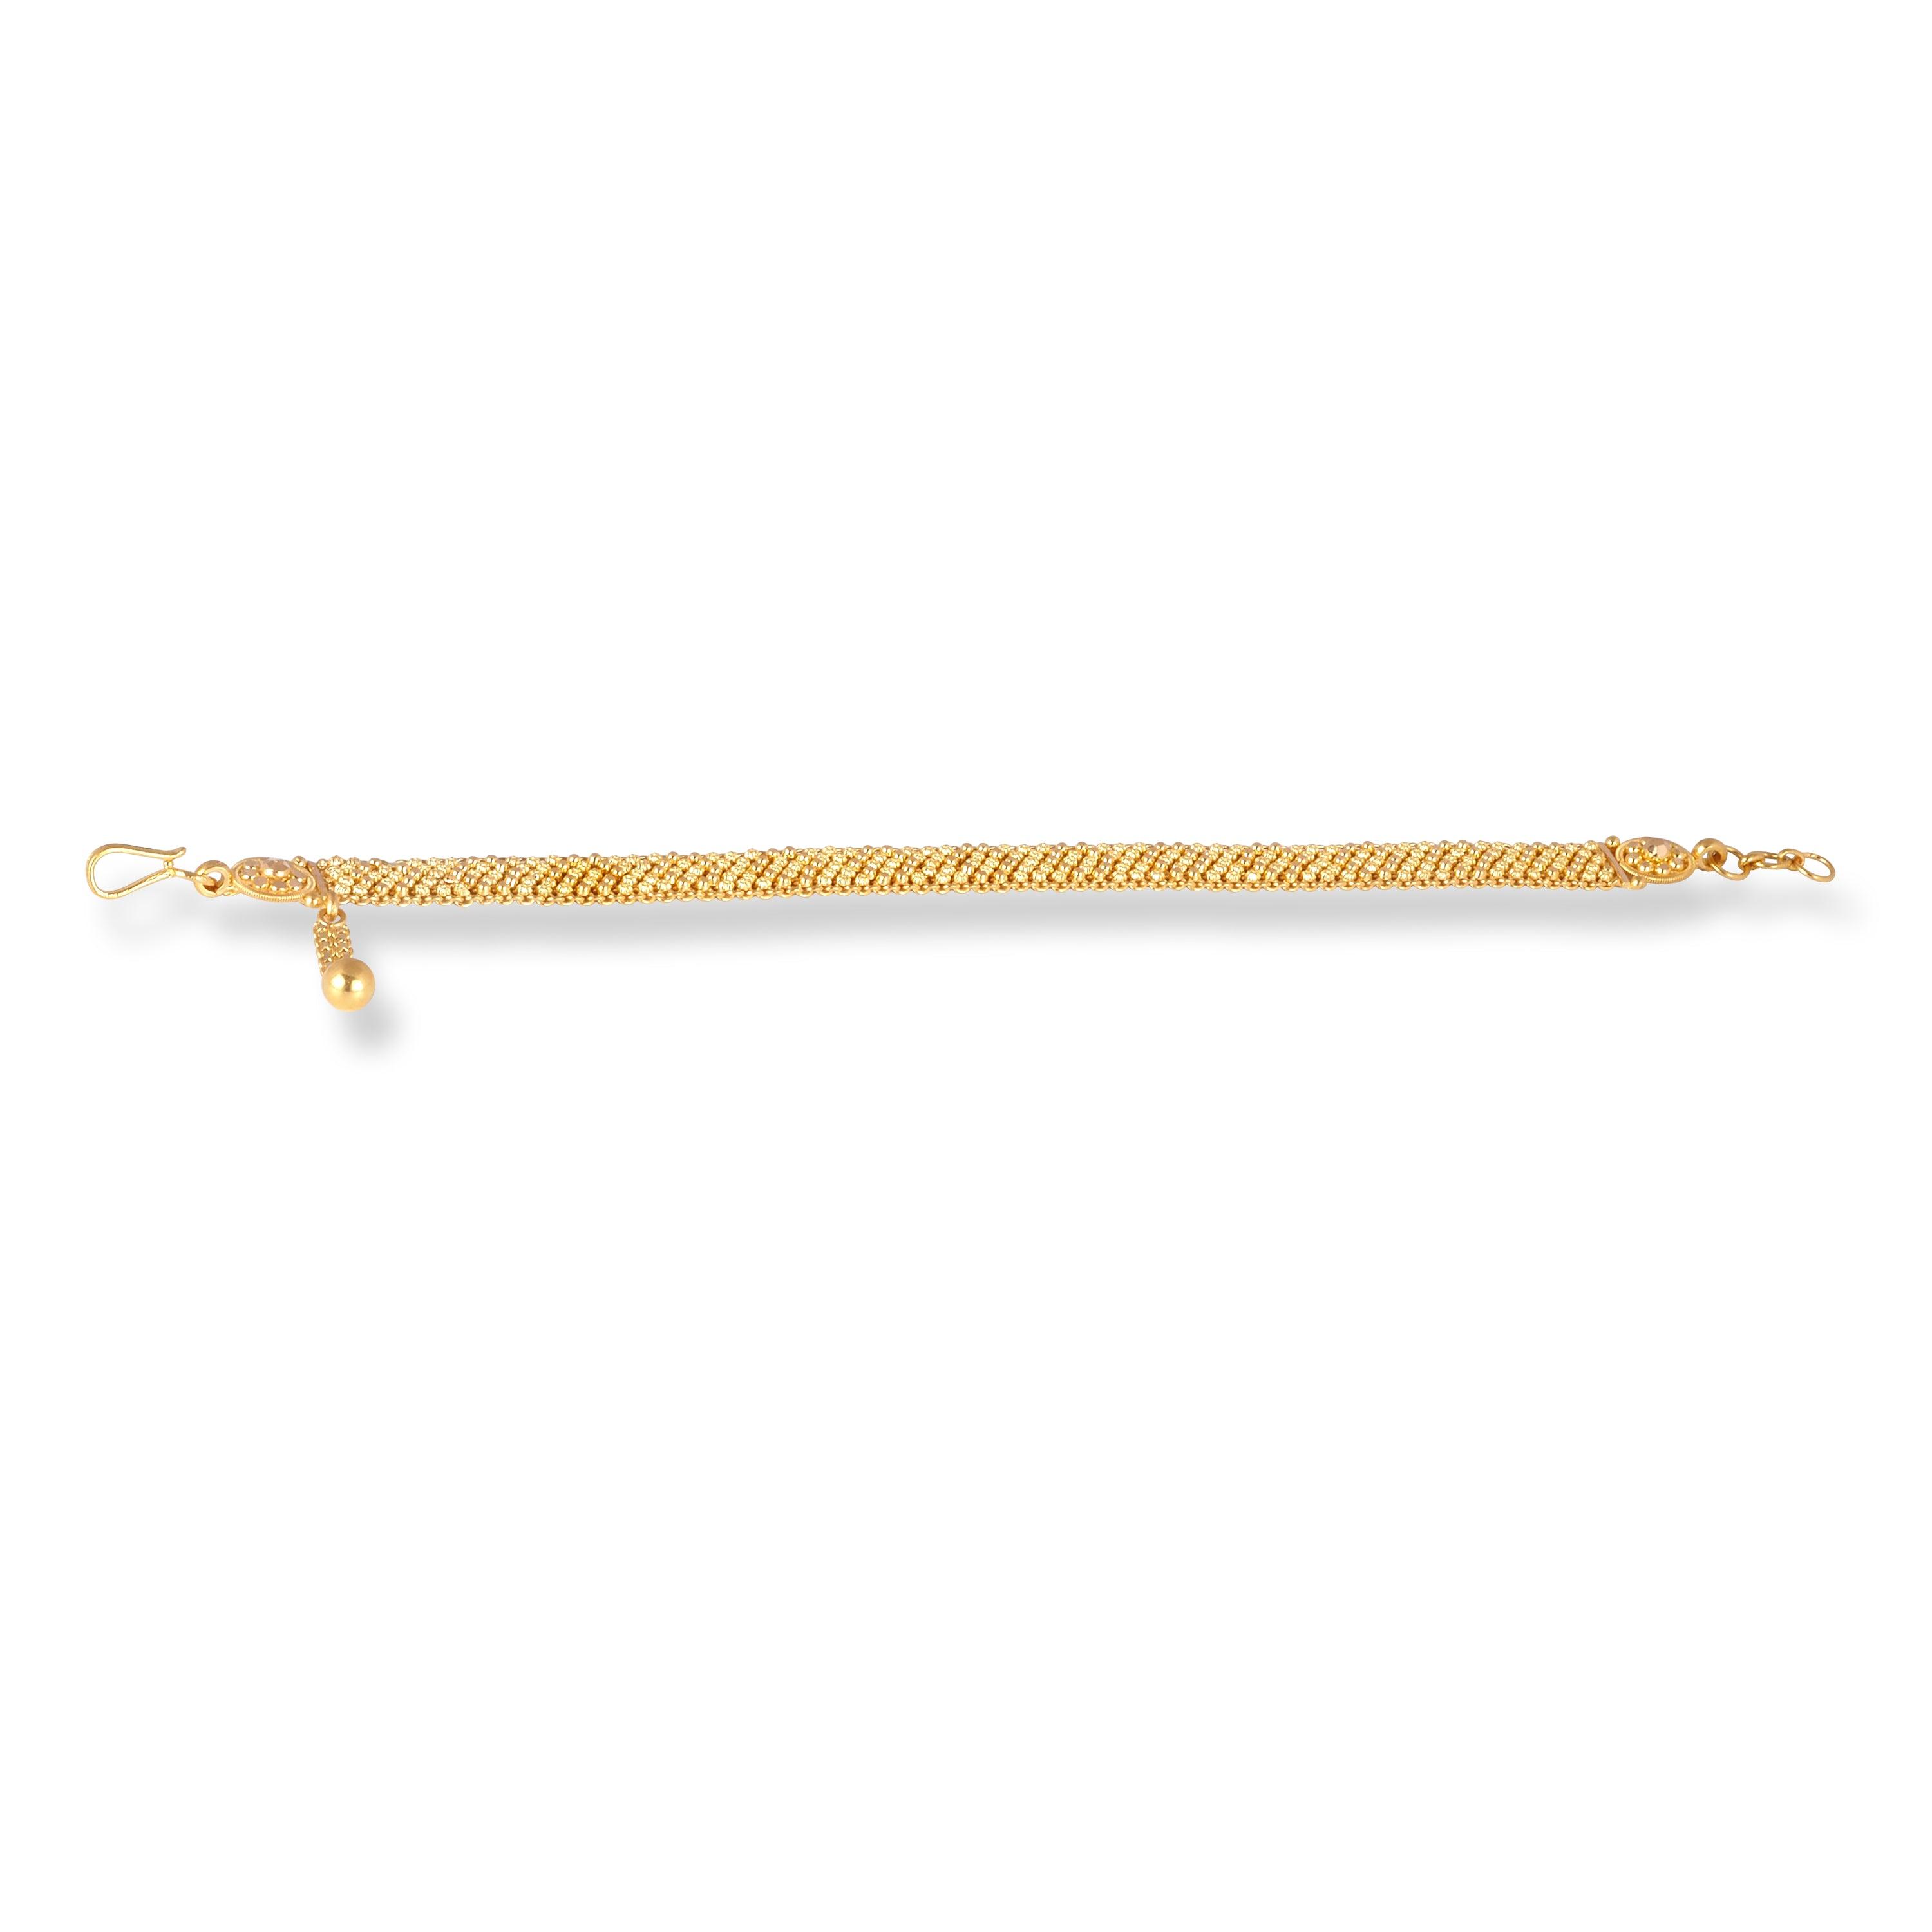 22ct Gold Ladies Bracelet in Filigree Work Design with U-Hook Clasp LBR-7148 - Minar Jewellers